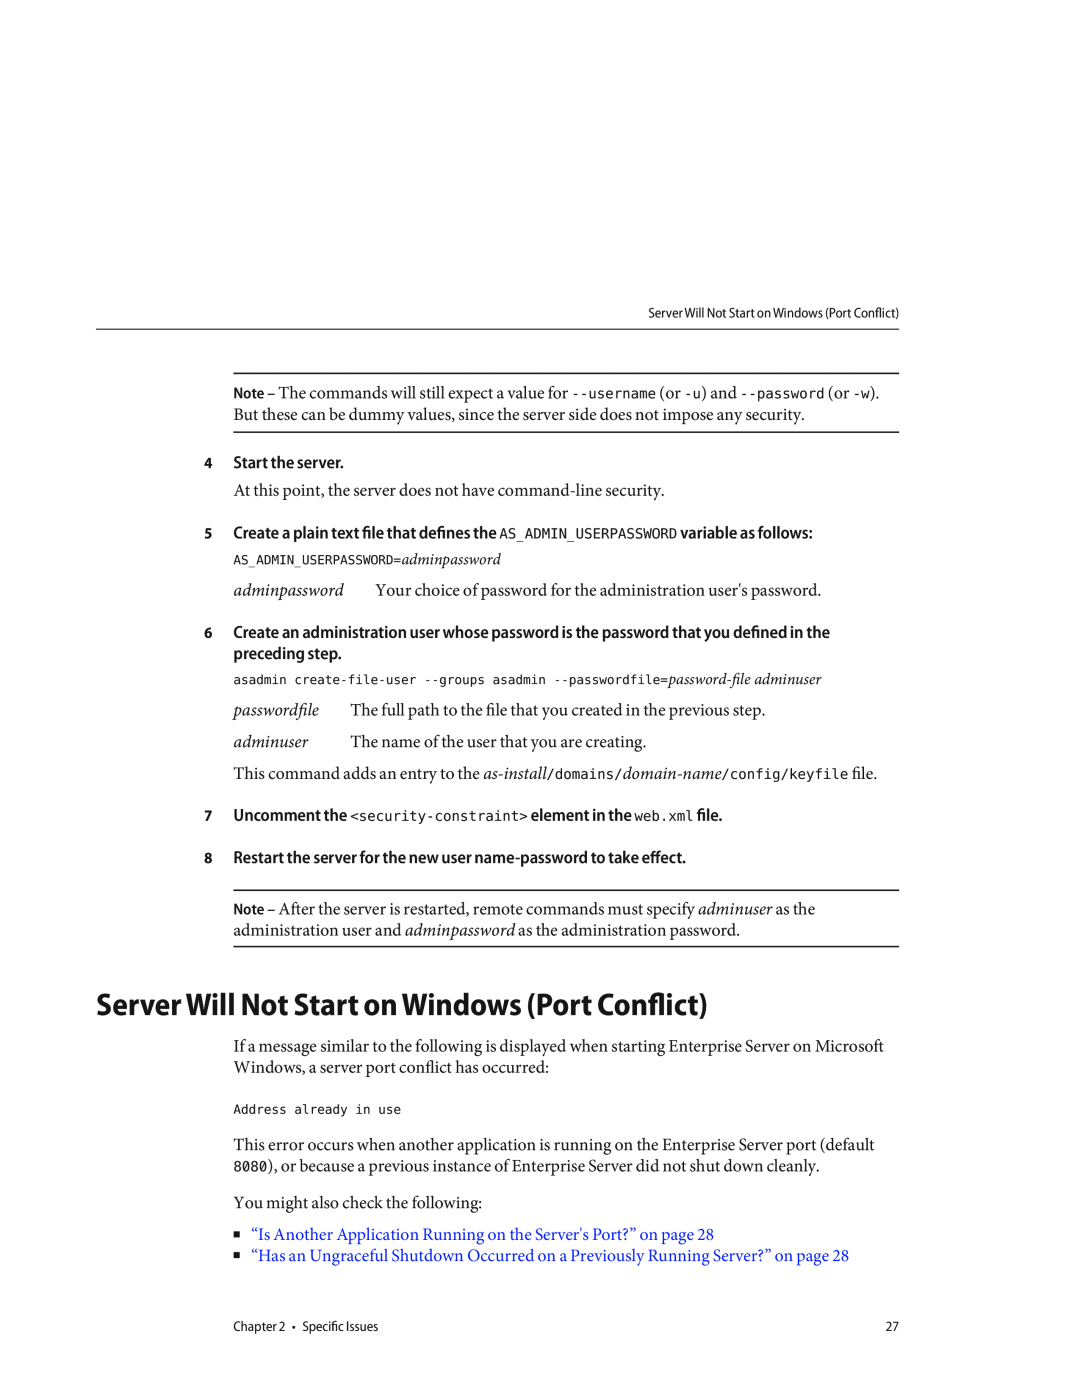 Sun Microsystems 820682310 manual Server Will Not Start on Windows Port Conflict, Start the server 